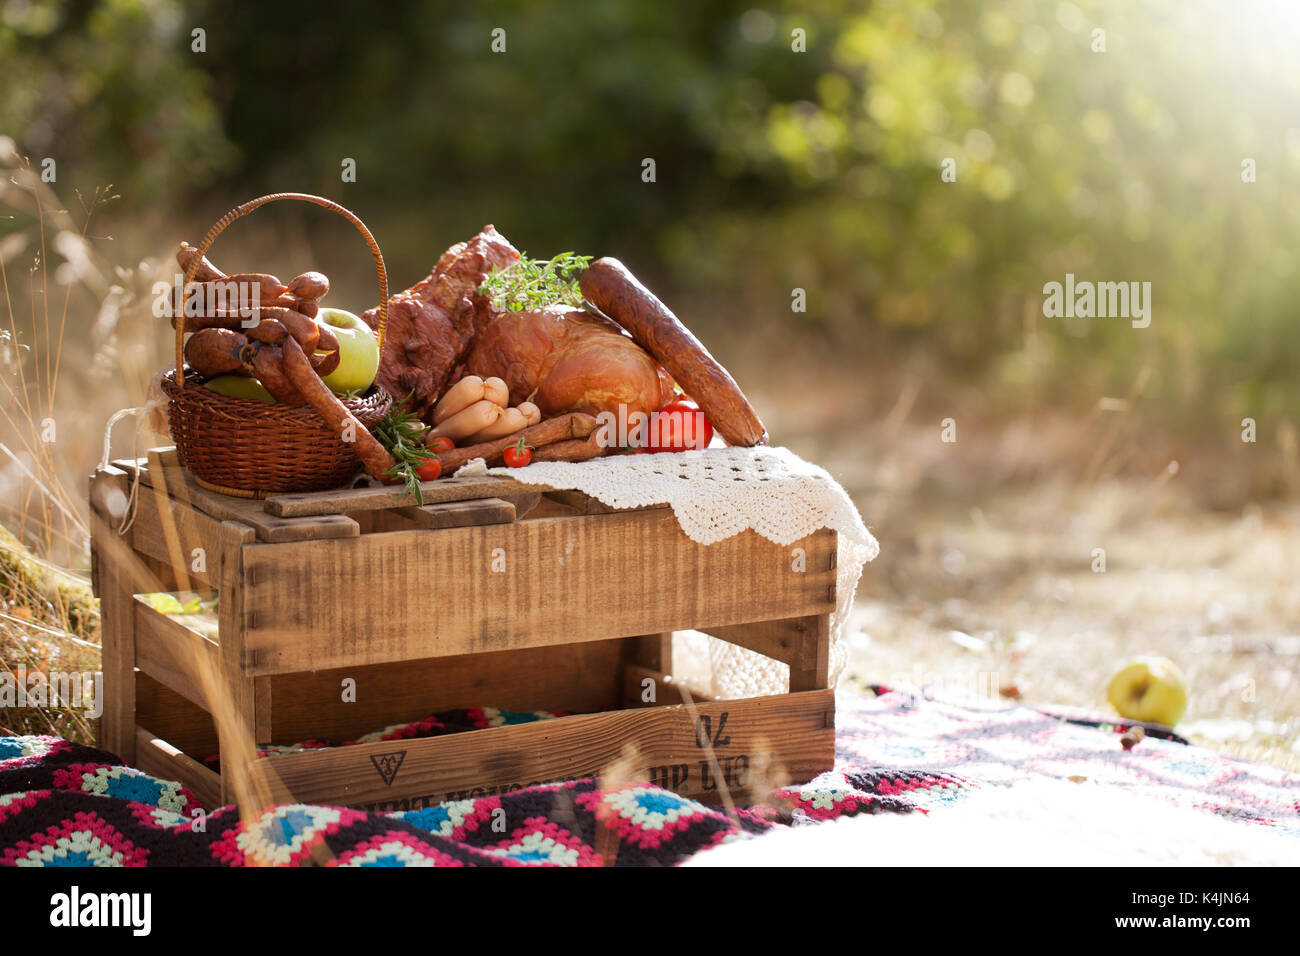 https://c8.alamy.com/comp/K4JN64/picnic-cured-meat-sausages-in-a-basket-on-the-blanket-K4JN64.jpg